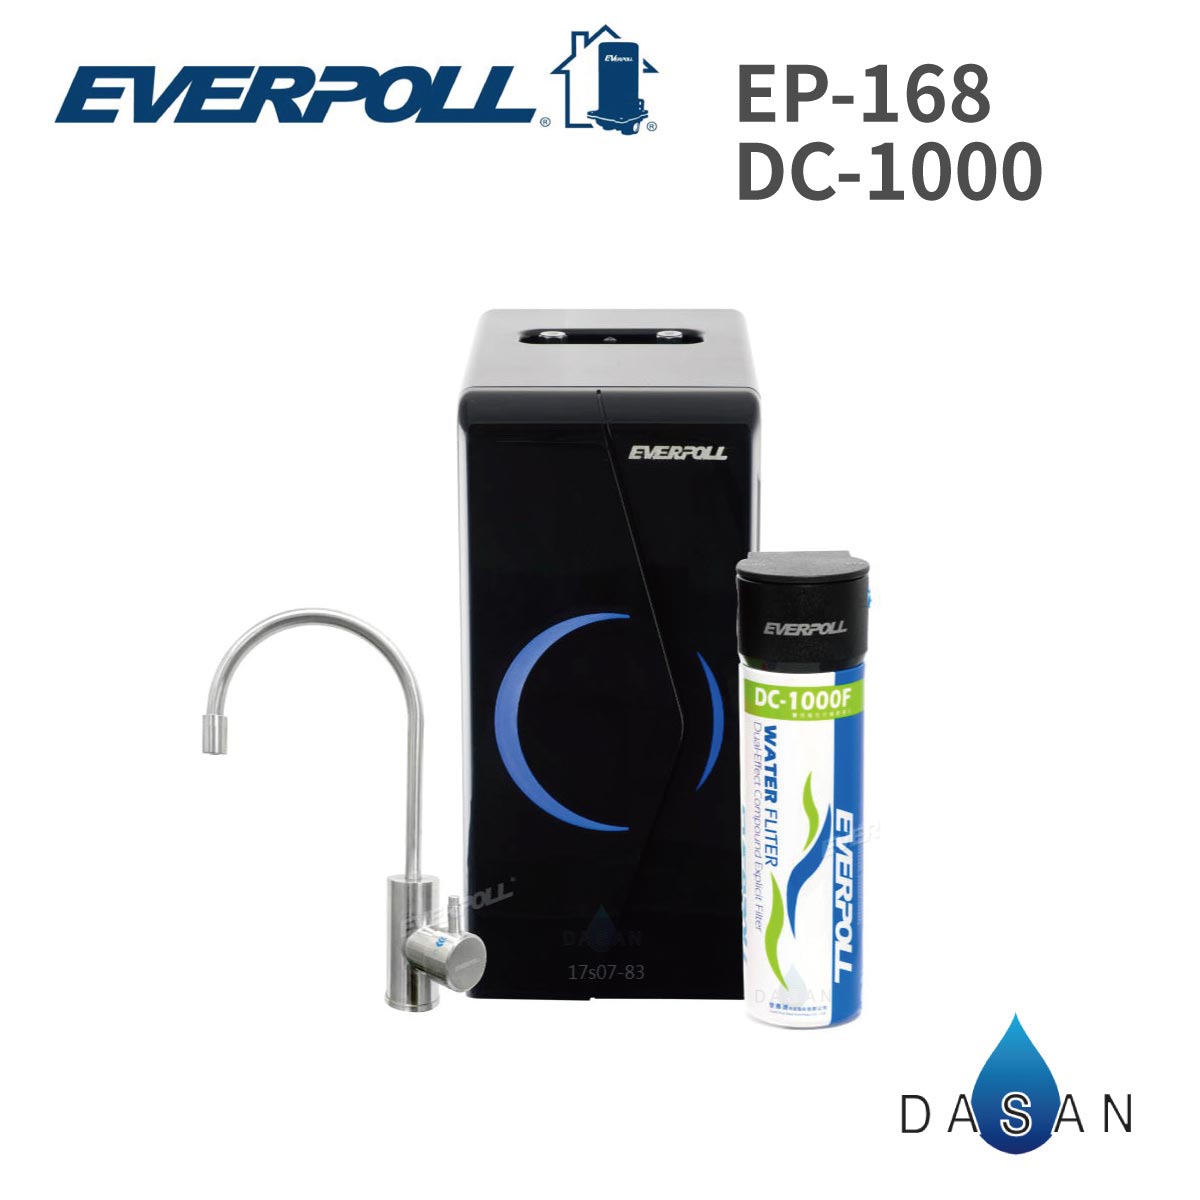 【EVERPOLL】 EP-168 + DC-1000 廚下型雙溫無壓飲水機+單道雙效複合式淨水組搭雙溫安全防燙龍頭